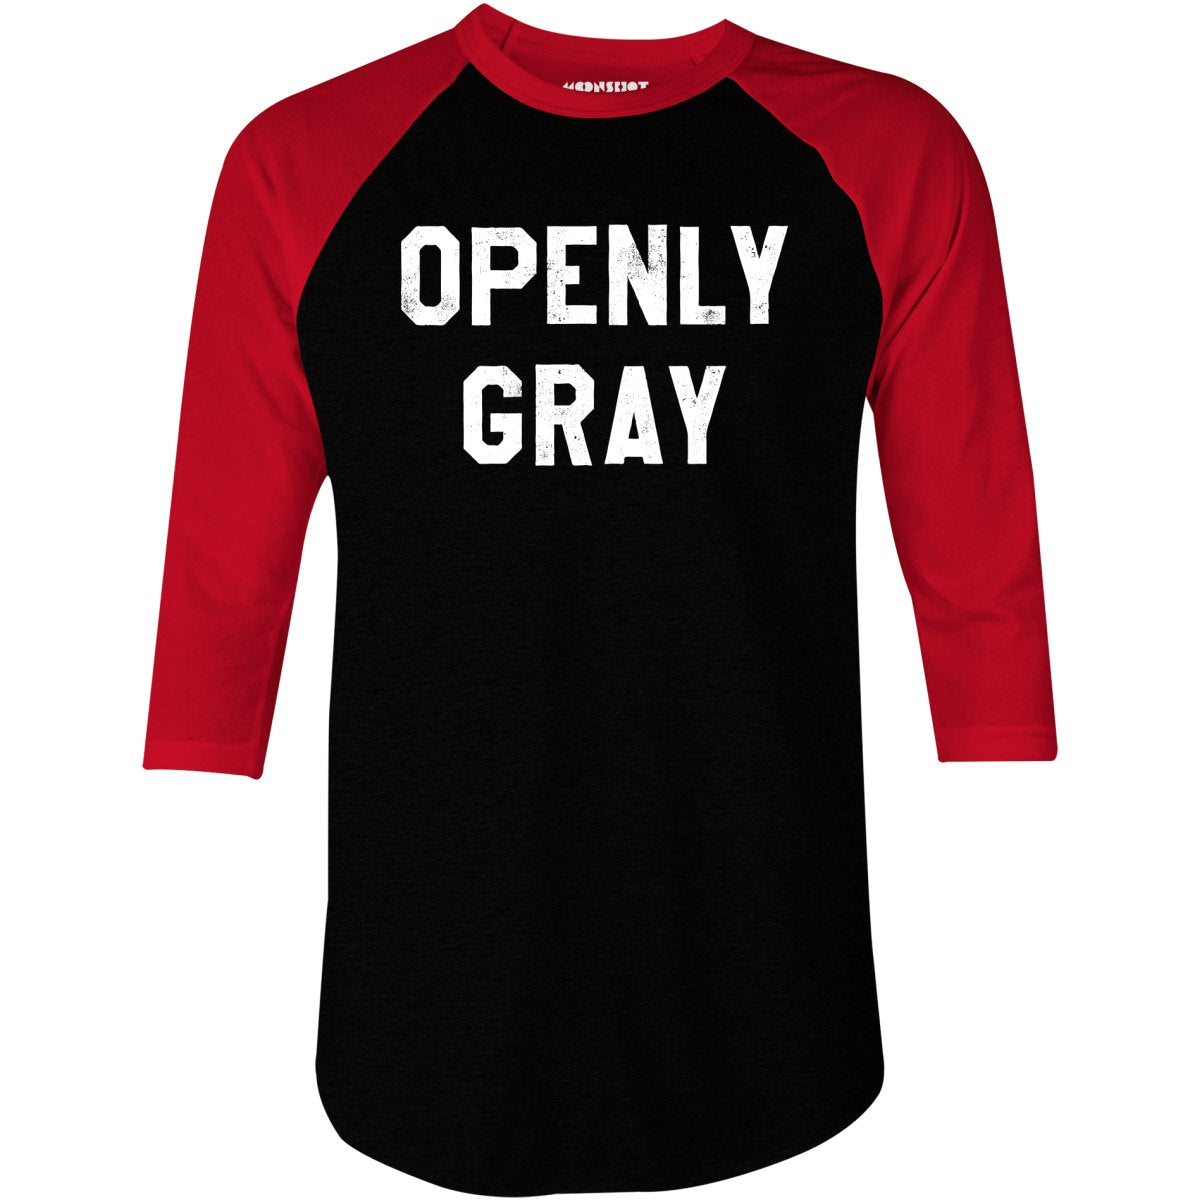 Openly Gray - 3/4 Sleeve Raglan T-Shirt